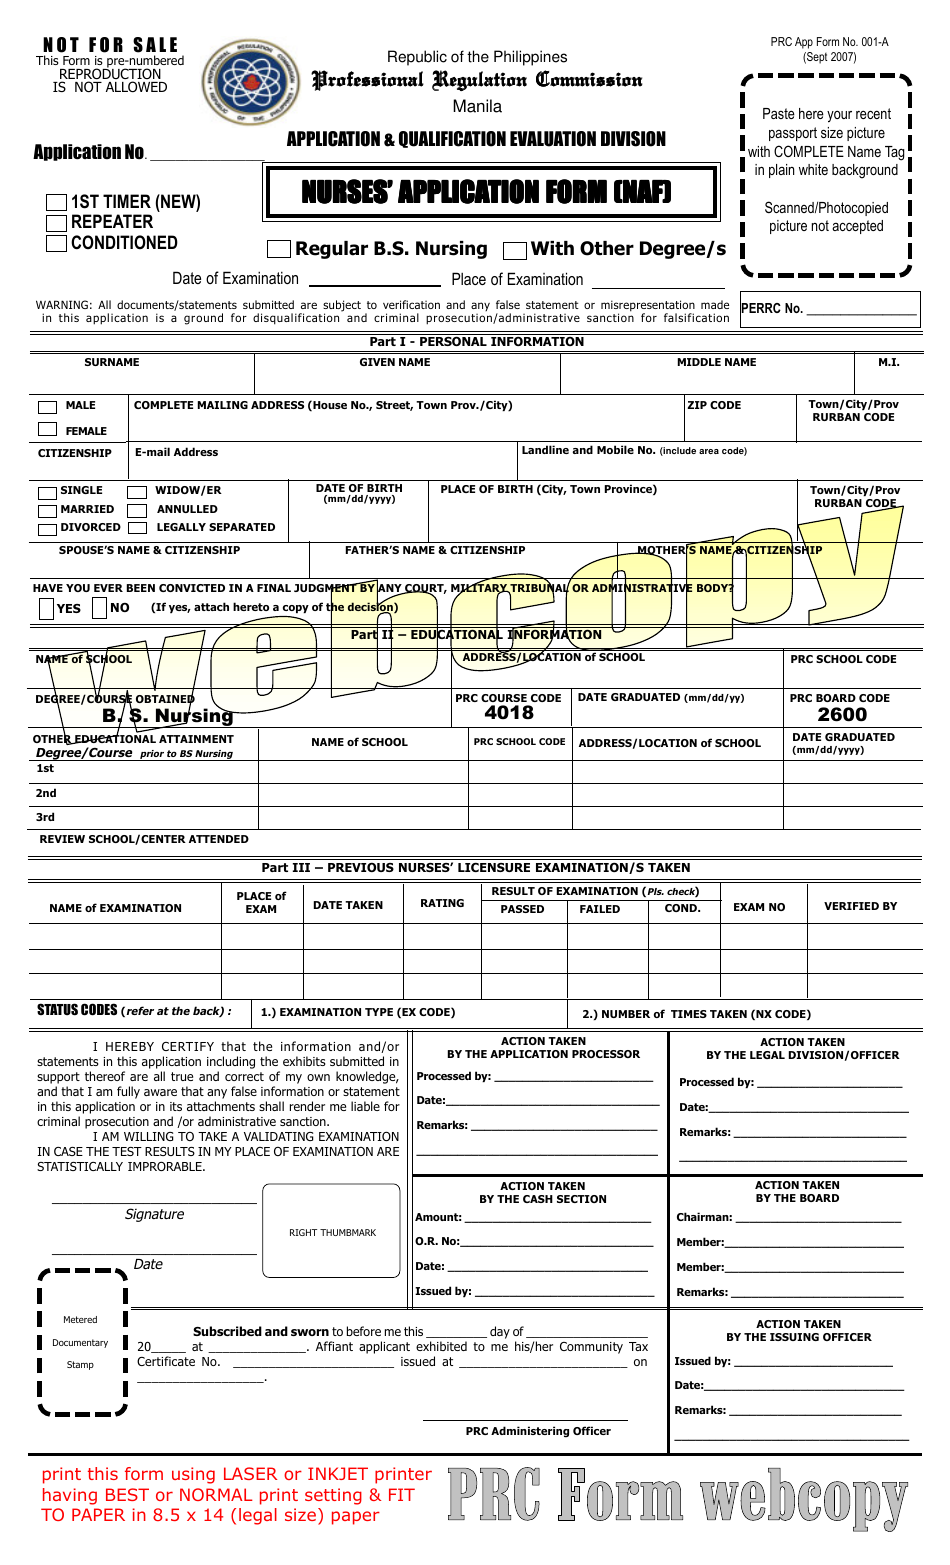 Form 001-A Nurses Application Form (NAF) - Sample - Philippines, Page 1